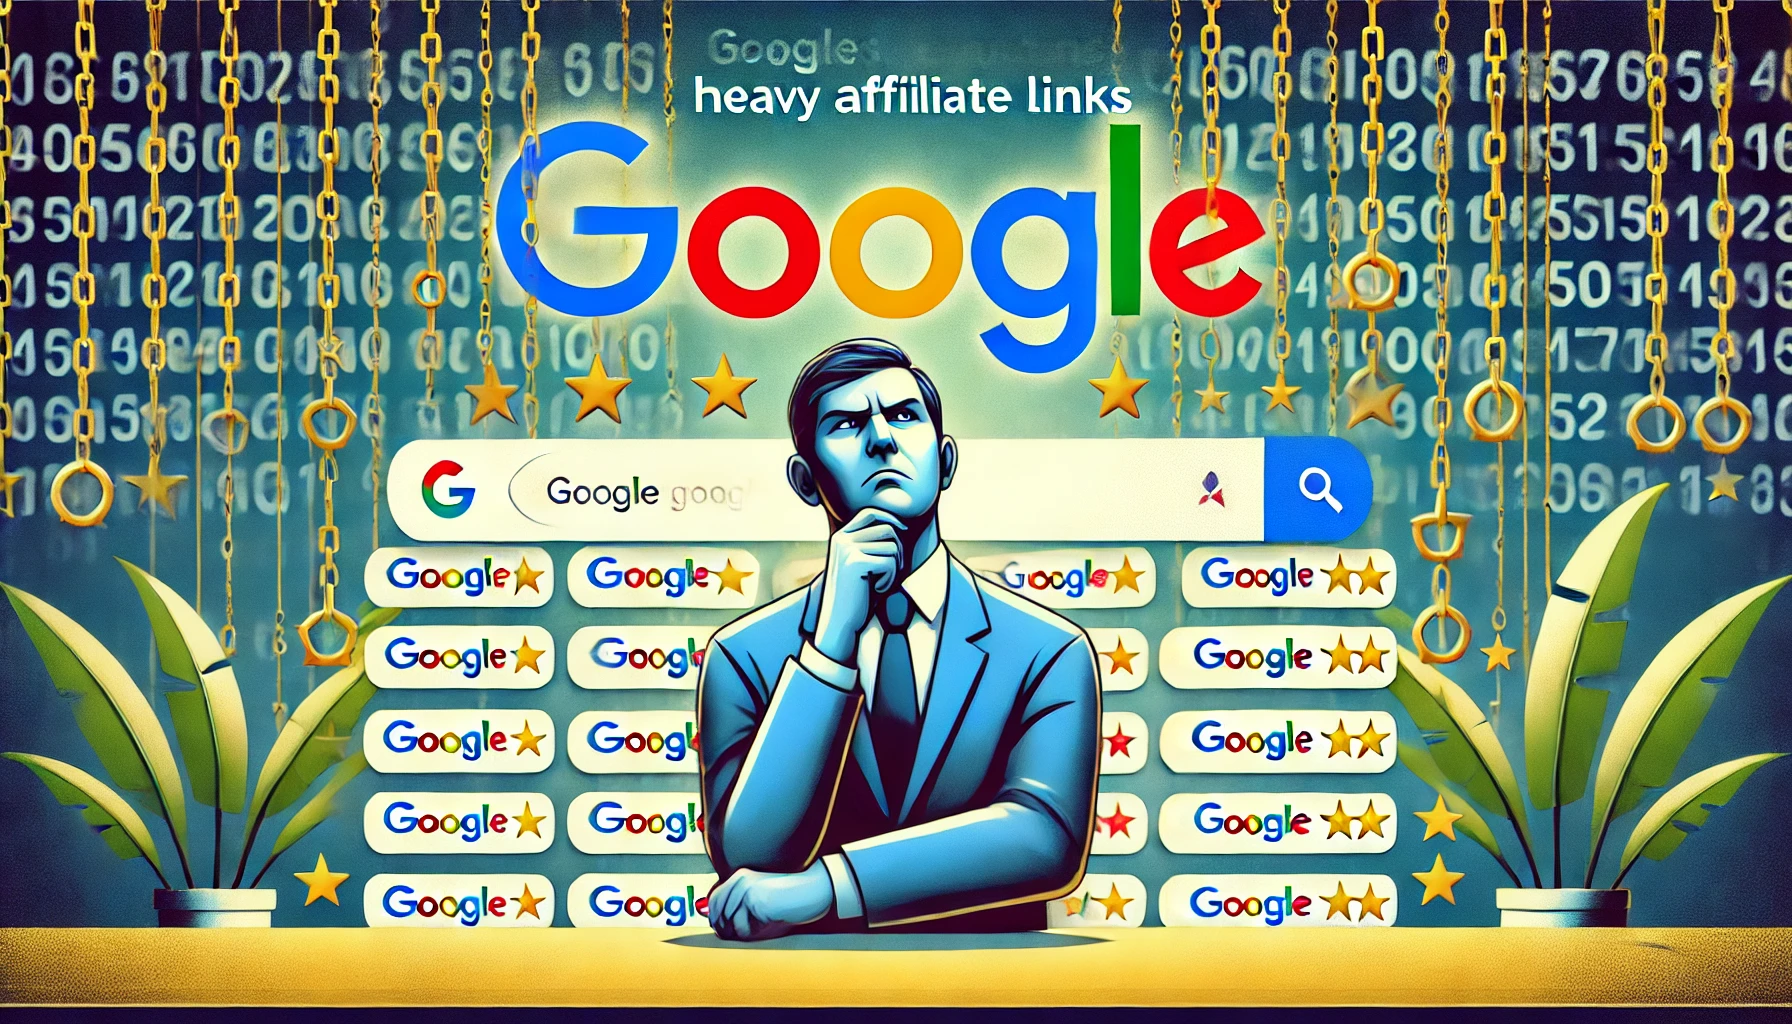 Does Google Like Heavy Affiliate Links?